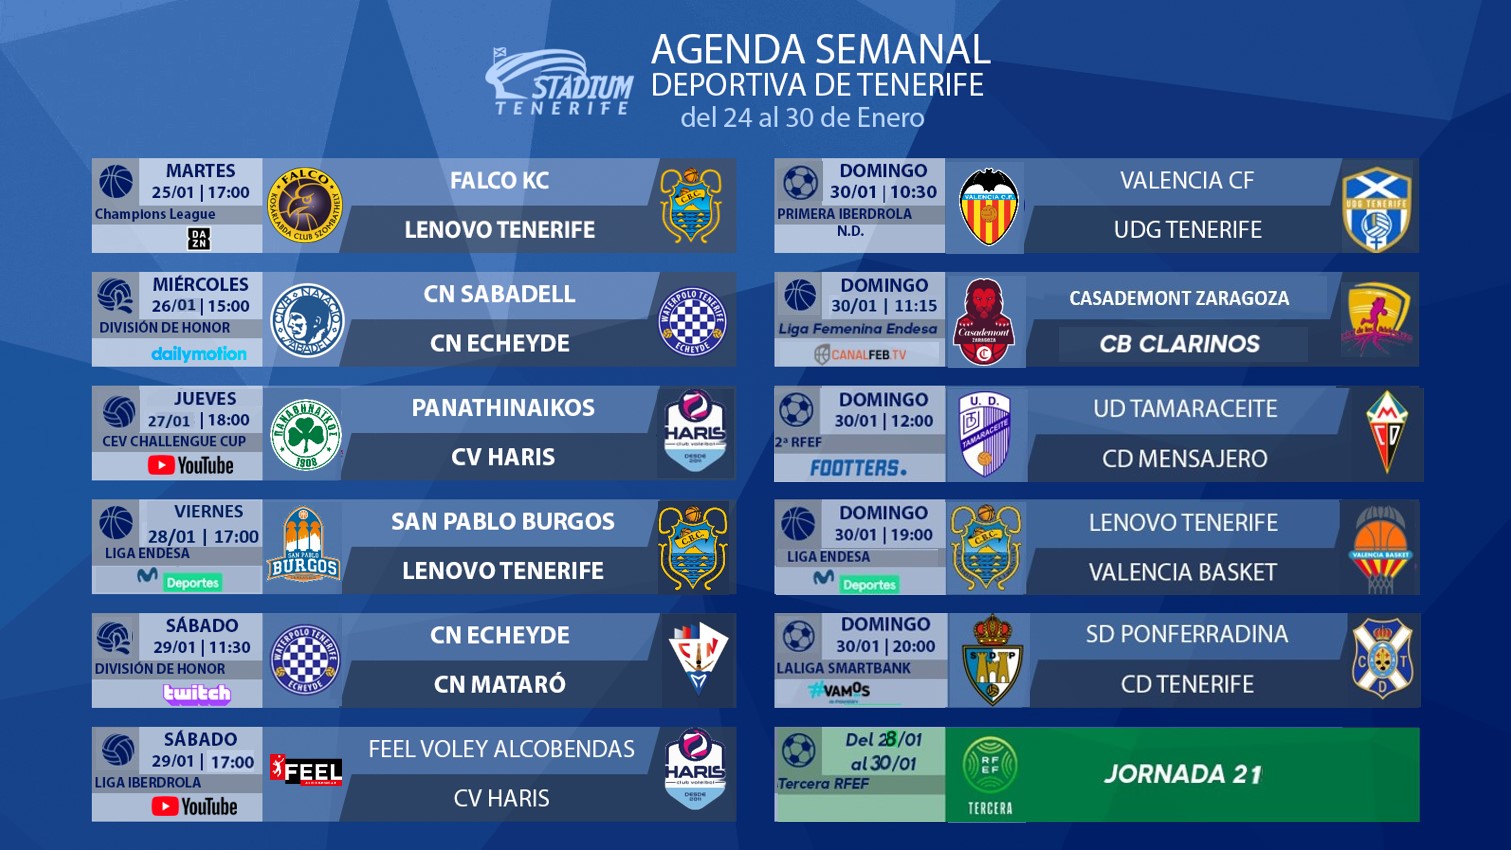 Agenda Semanal Deportiva de Tenerife (24 al 30 de enero)